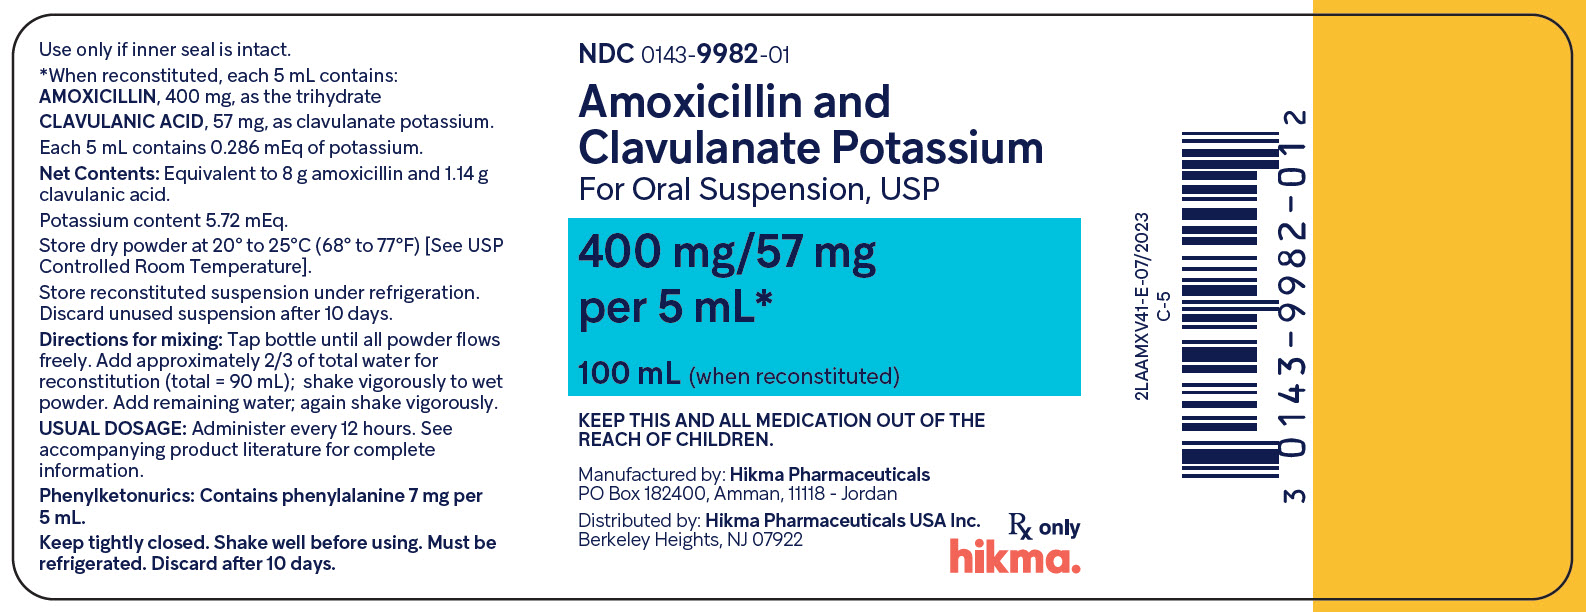 NDC 0143-9982-01 Amoxicillin and Clavulanate Potassium for Oral Suspension, USP *400 MG/57 MG Per 5ML